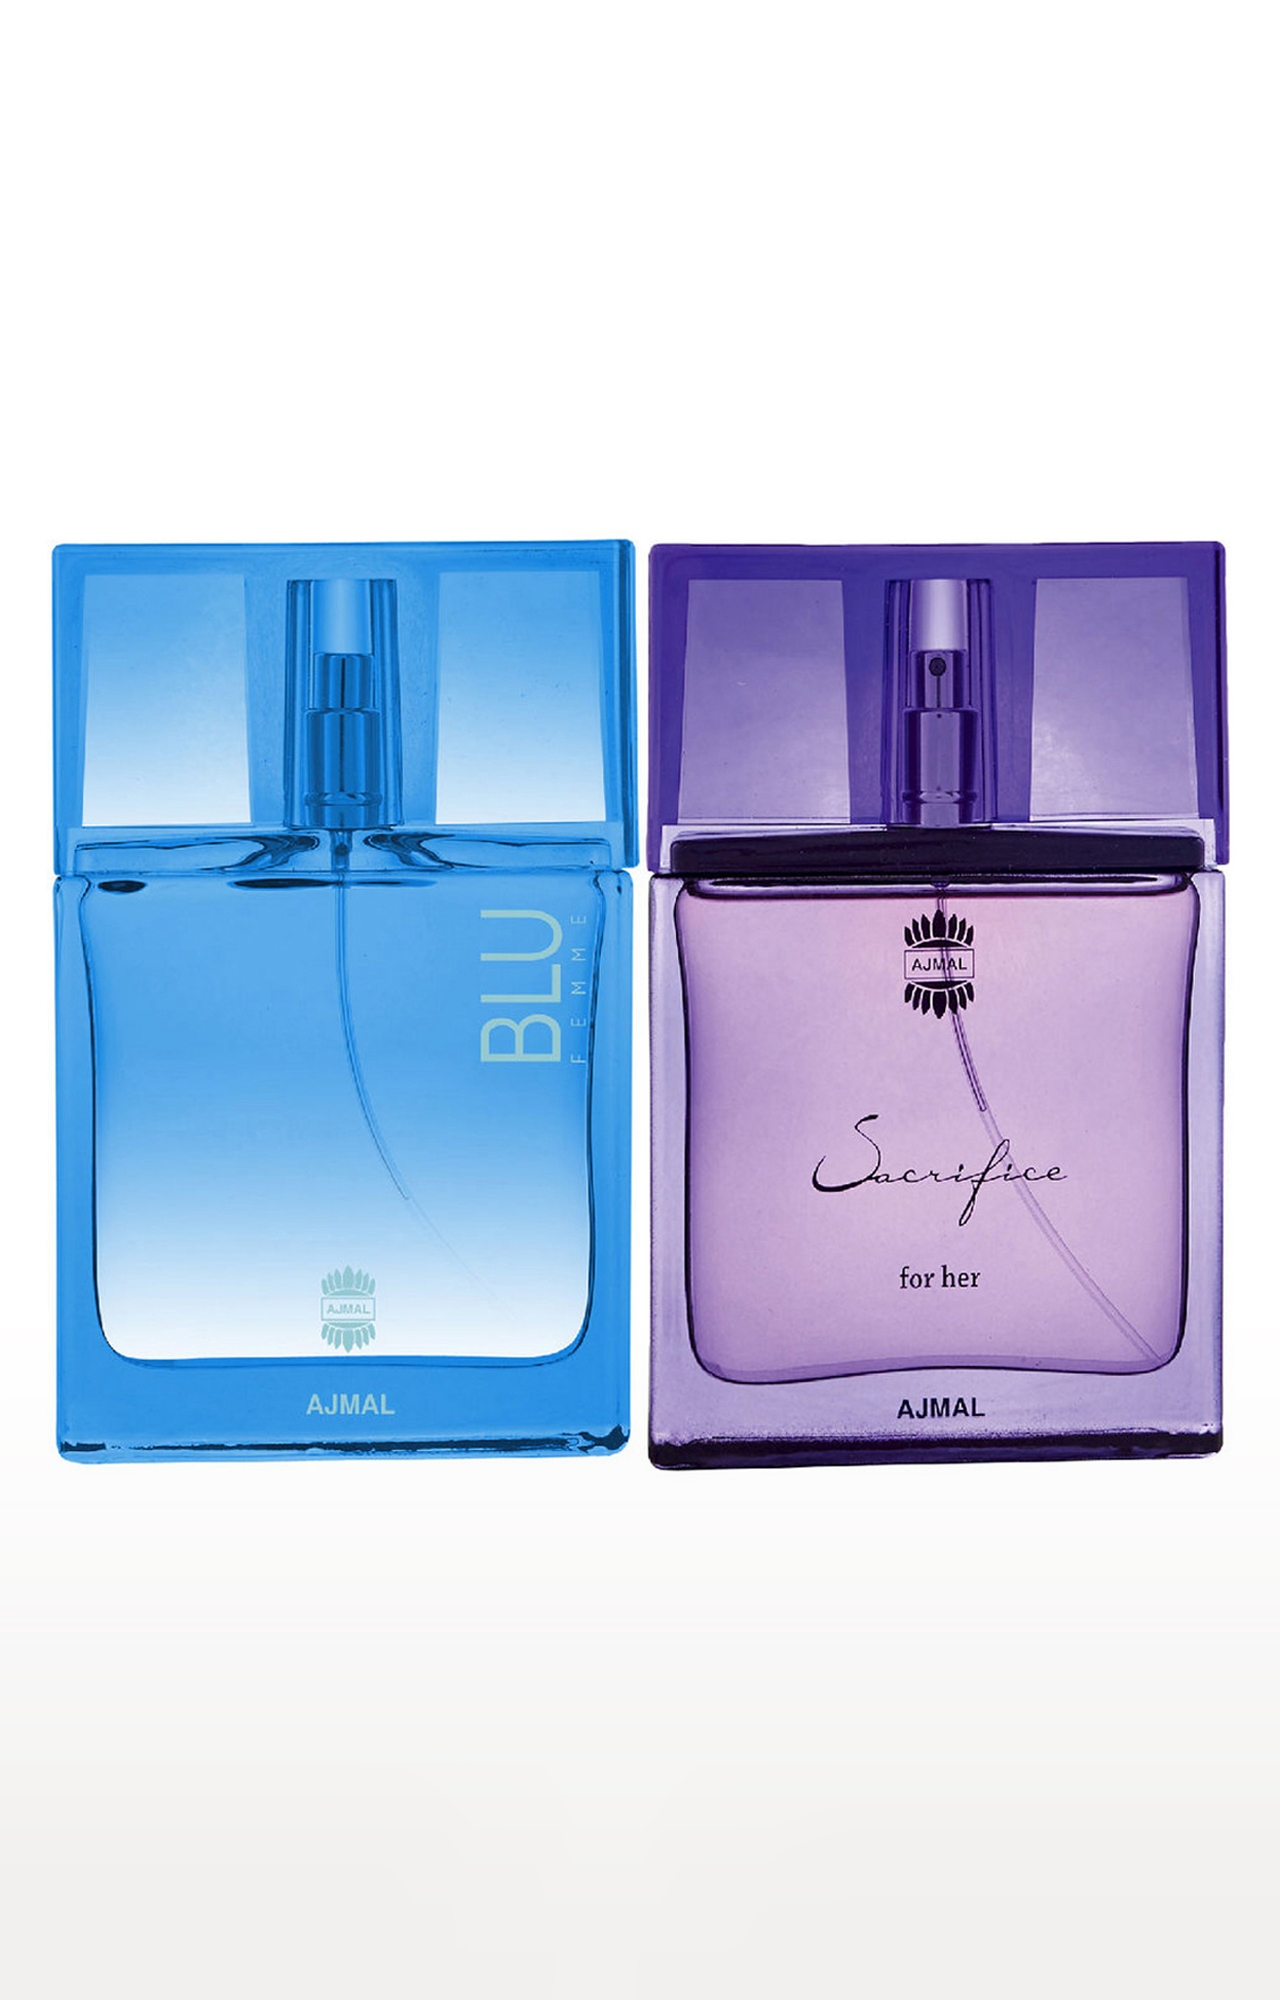 Ajmal | Ajmal Blu Femme EDP Perfume 50ml for Women and Sacrifice for HER EDP Musky Perfume 50ml for Women